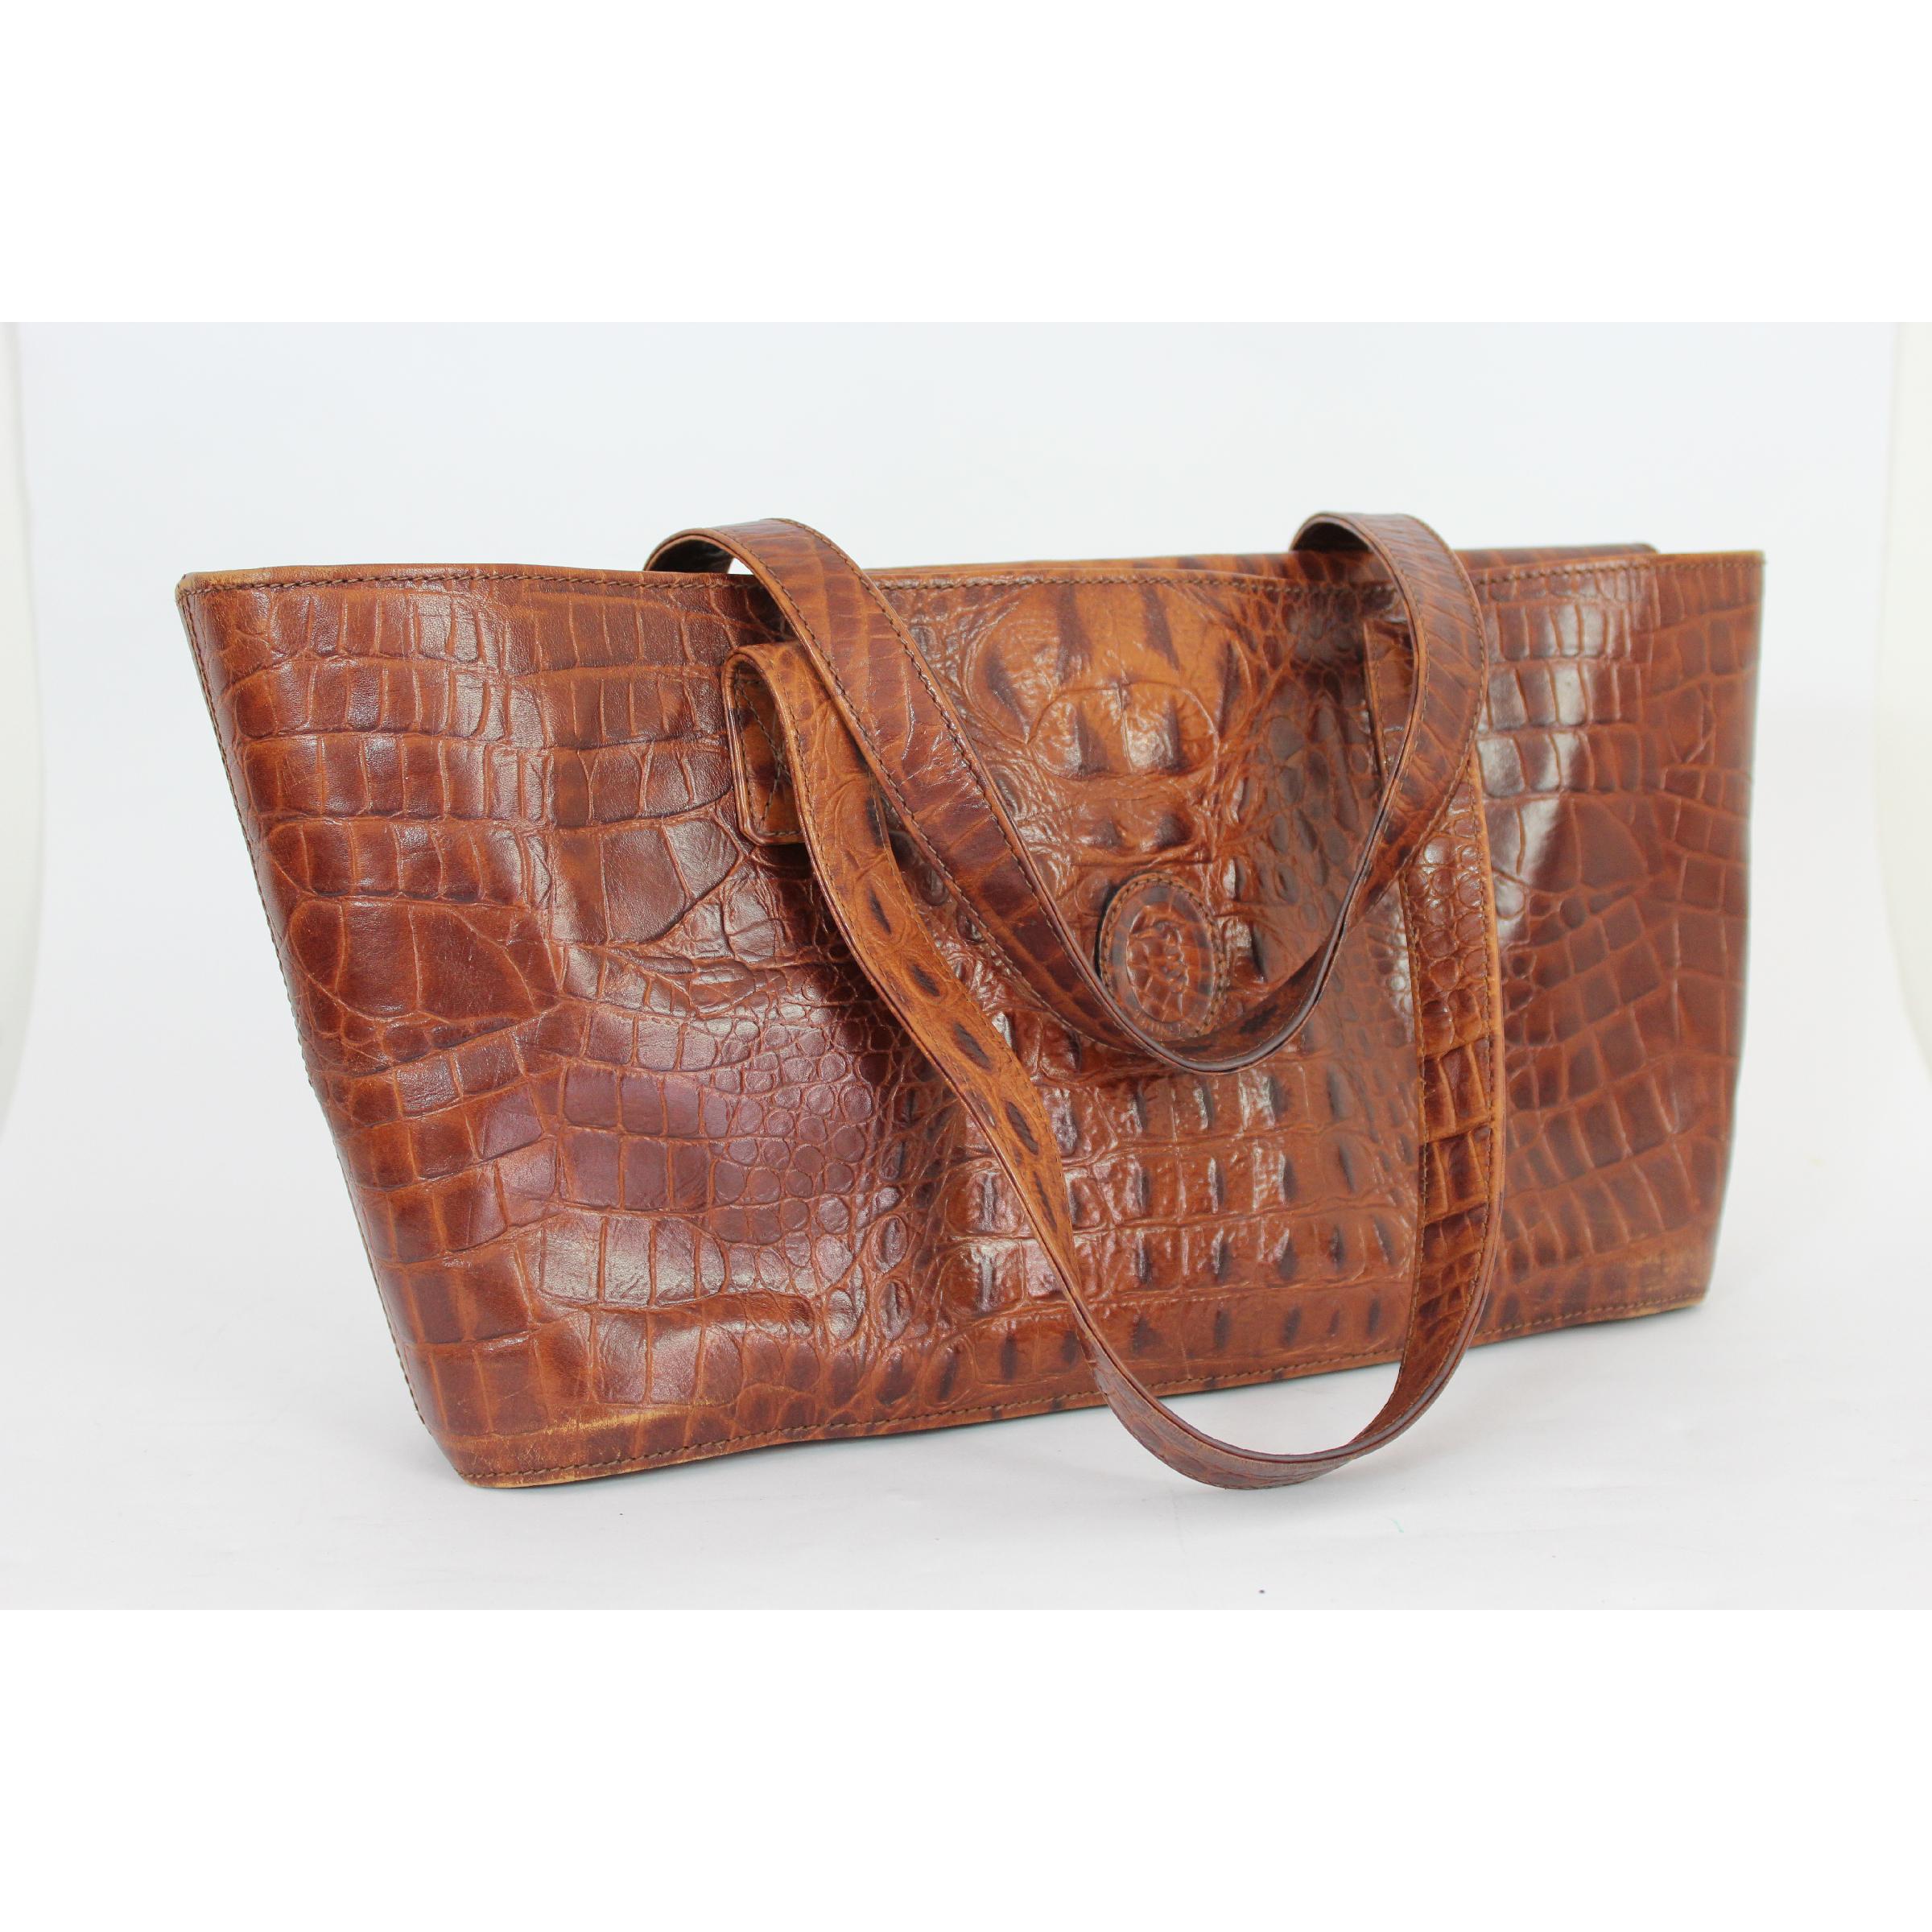 Trussardi vintage 80s handbag. Rigid shopper model, 100% crocodile print leather, brown color, clip closure. Made in Italy. Excellent vintage condition. 

Height: 22 cm 
Width: 46 cm 
Depth: 10 cm